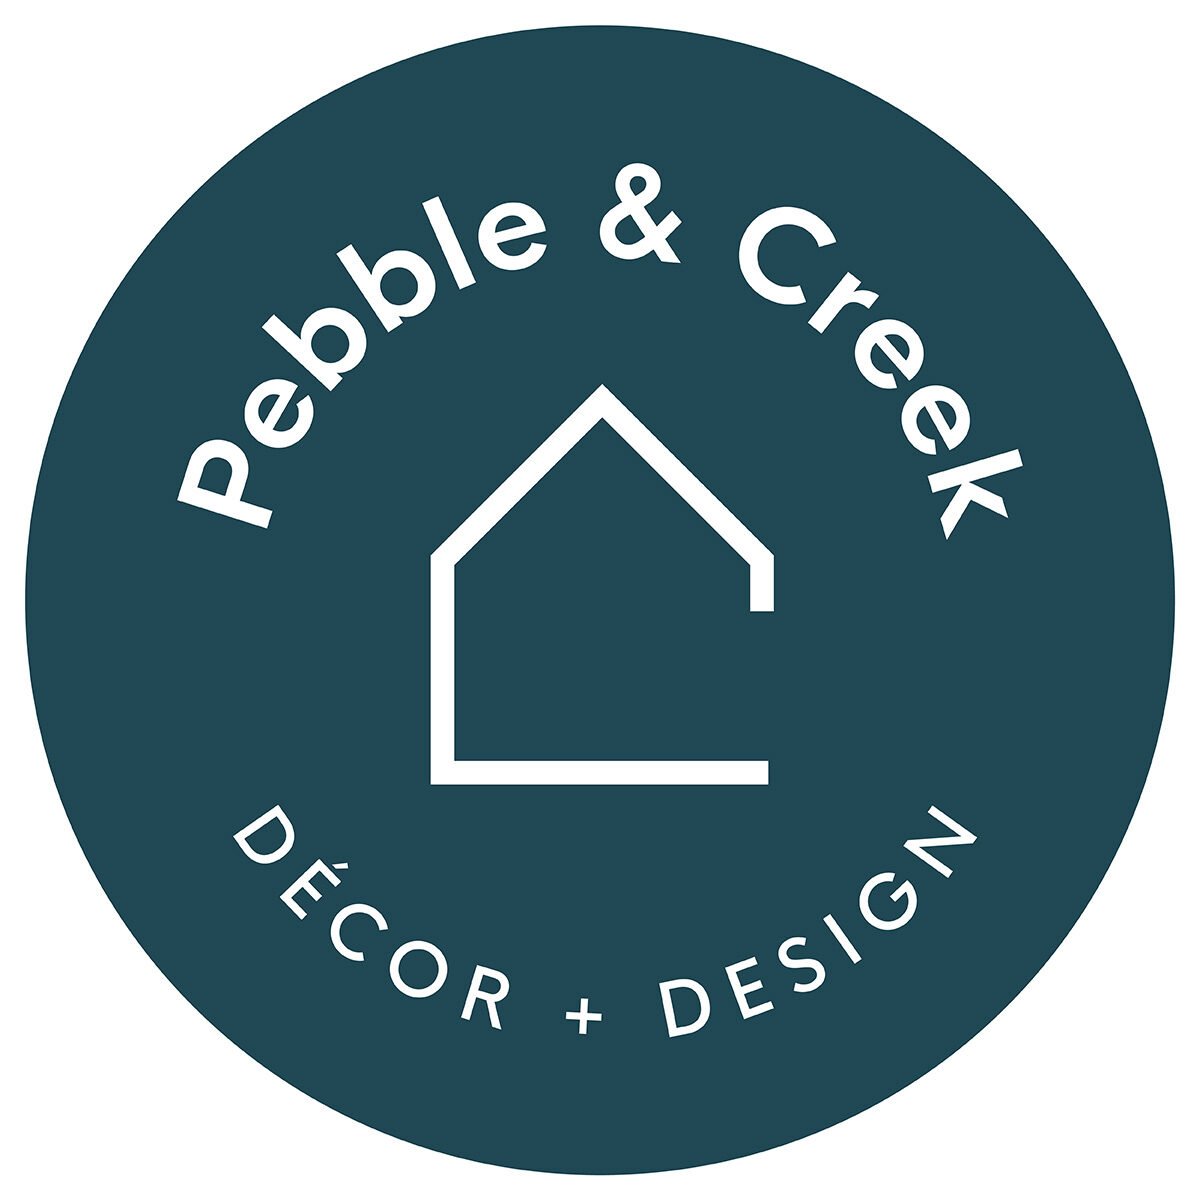 lindsay-mcghee-designs-pebble-and-creek-logo-badge-tealbg-1200